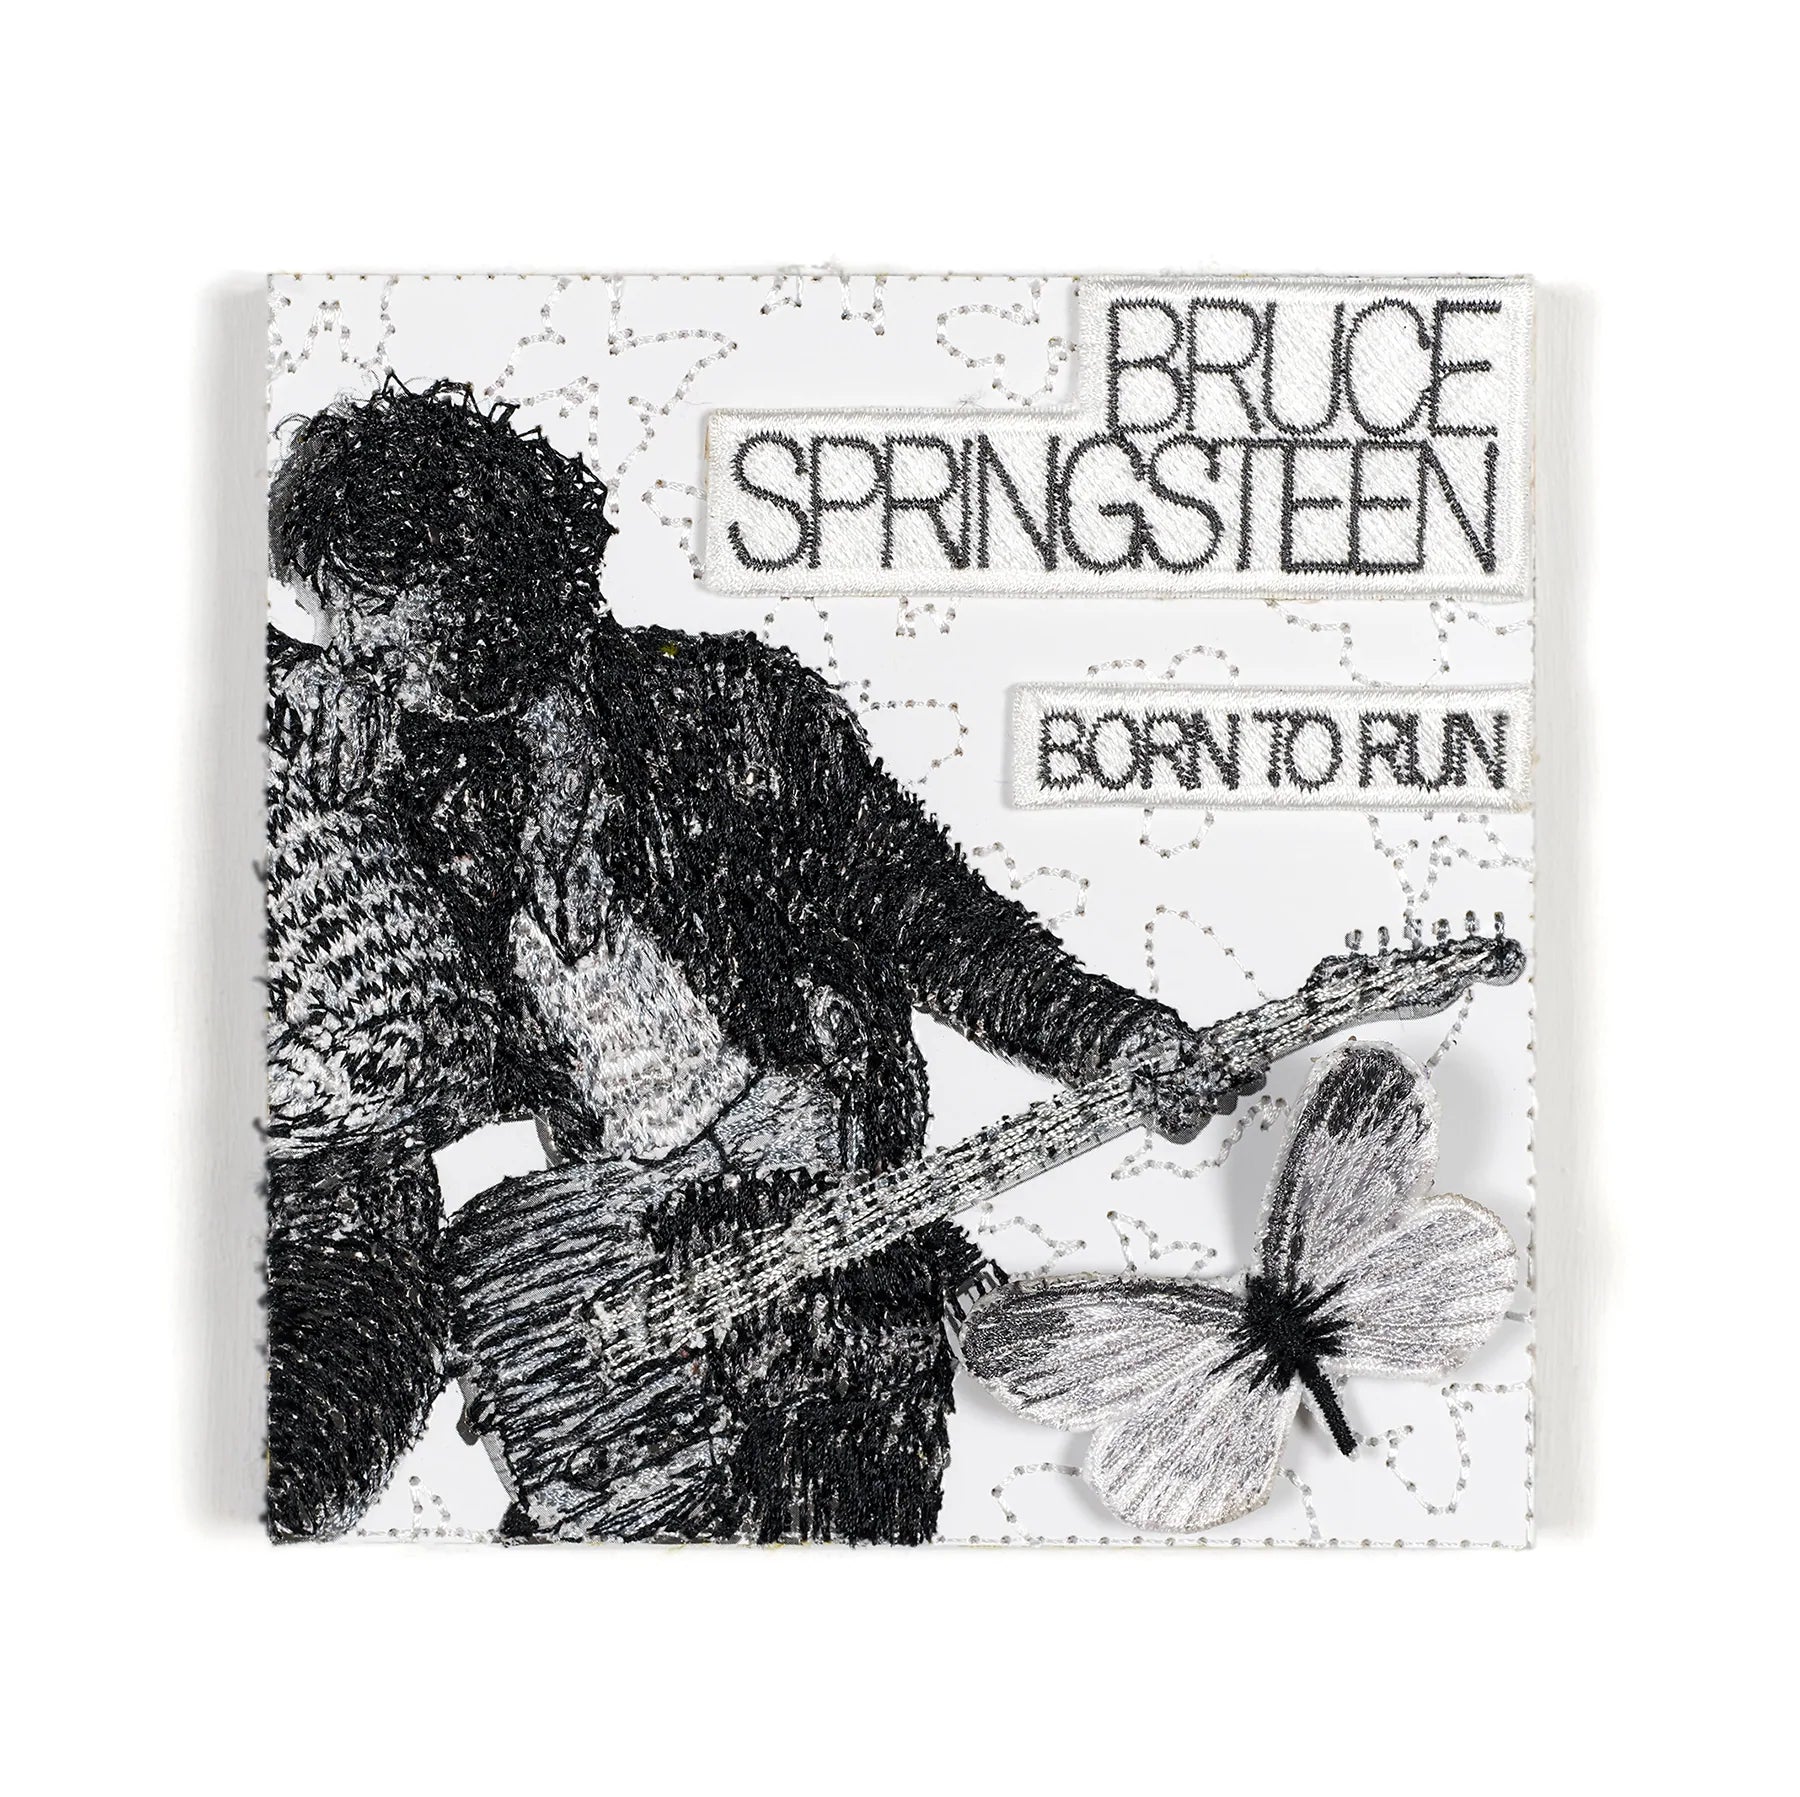 Born To Run, Bruce Springsteen